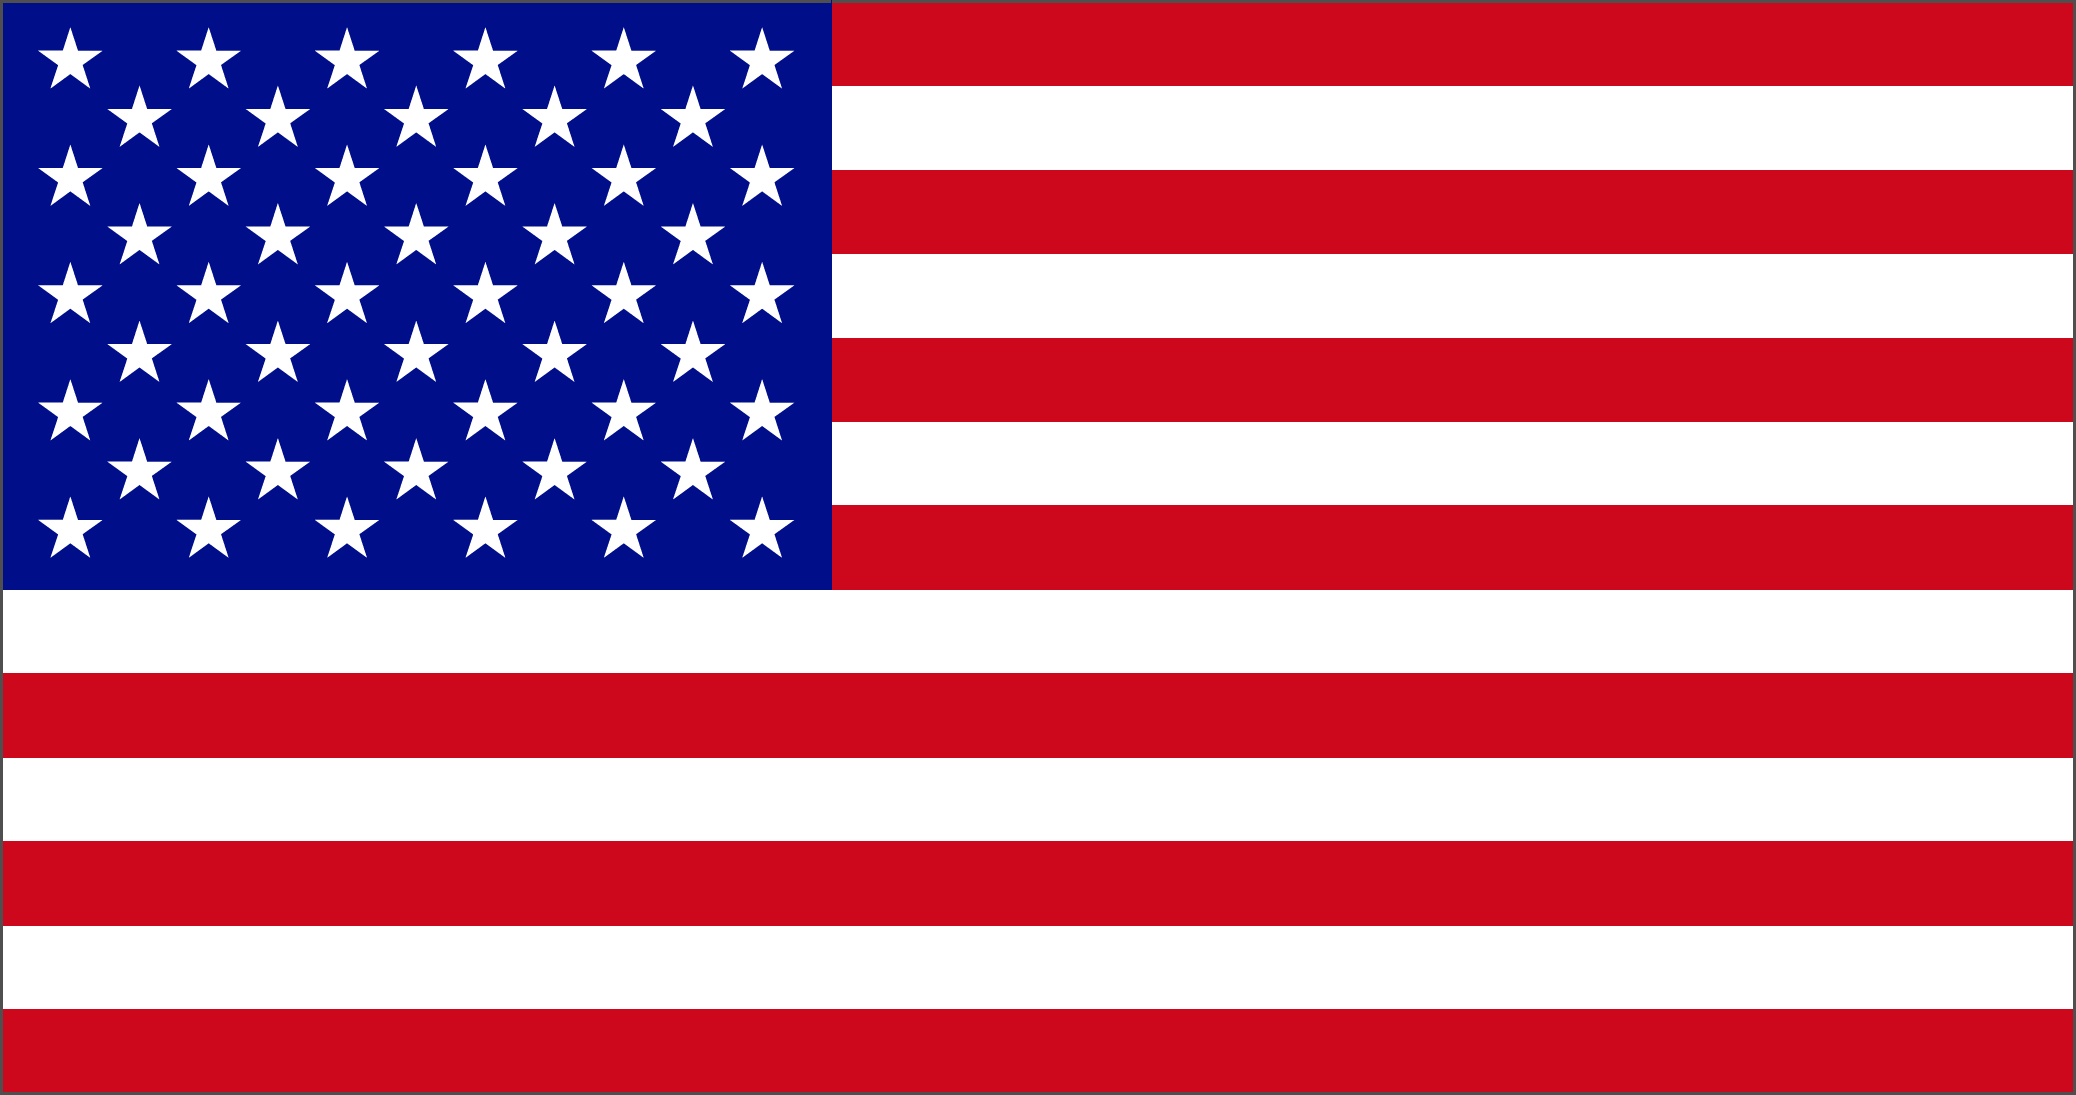 Where Would You Put a 51st Star on the U.S. Flag? | Smart News ...